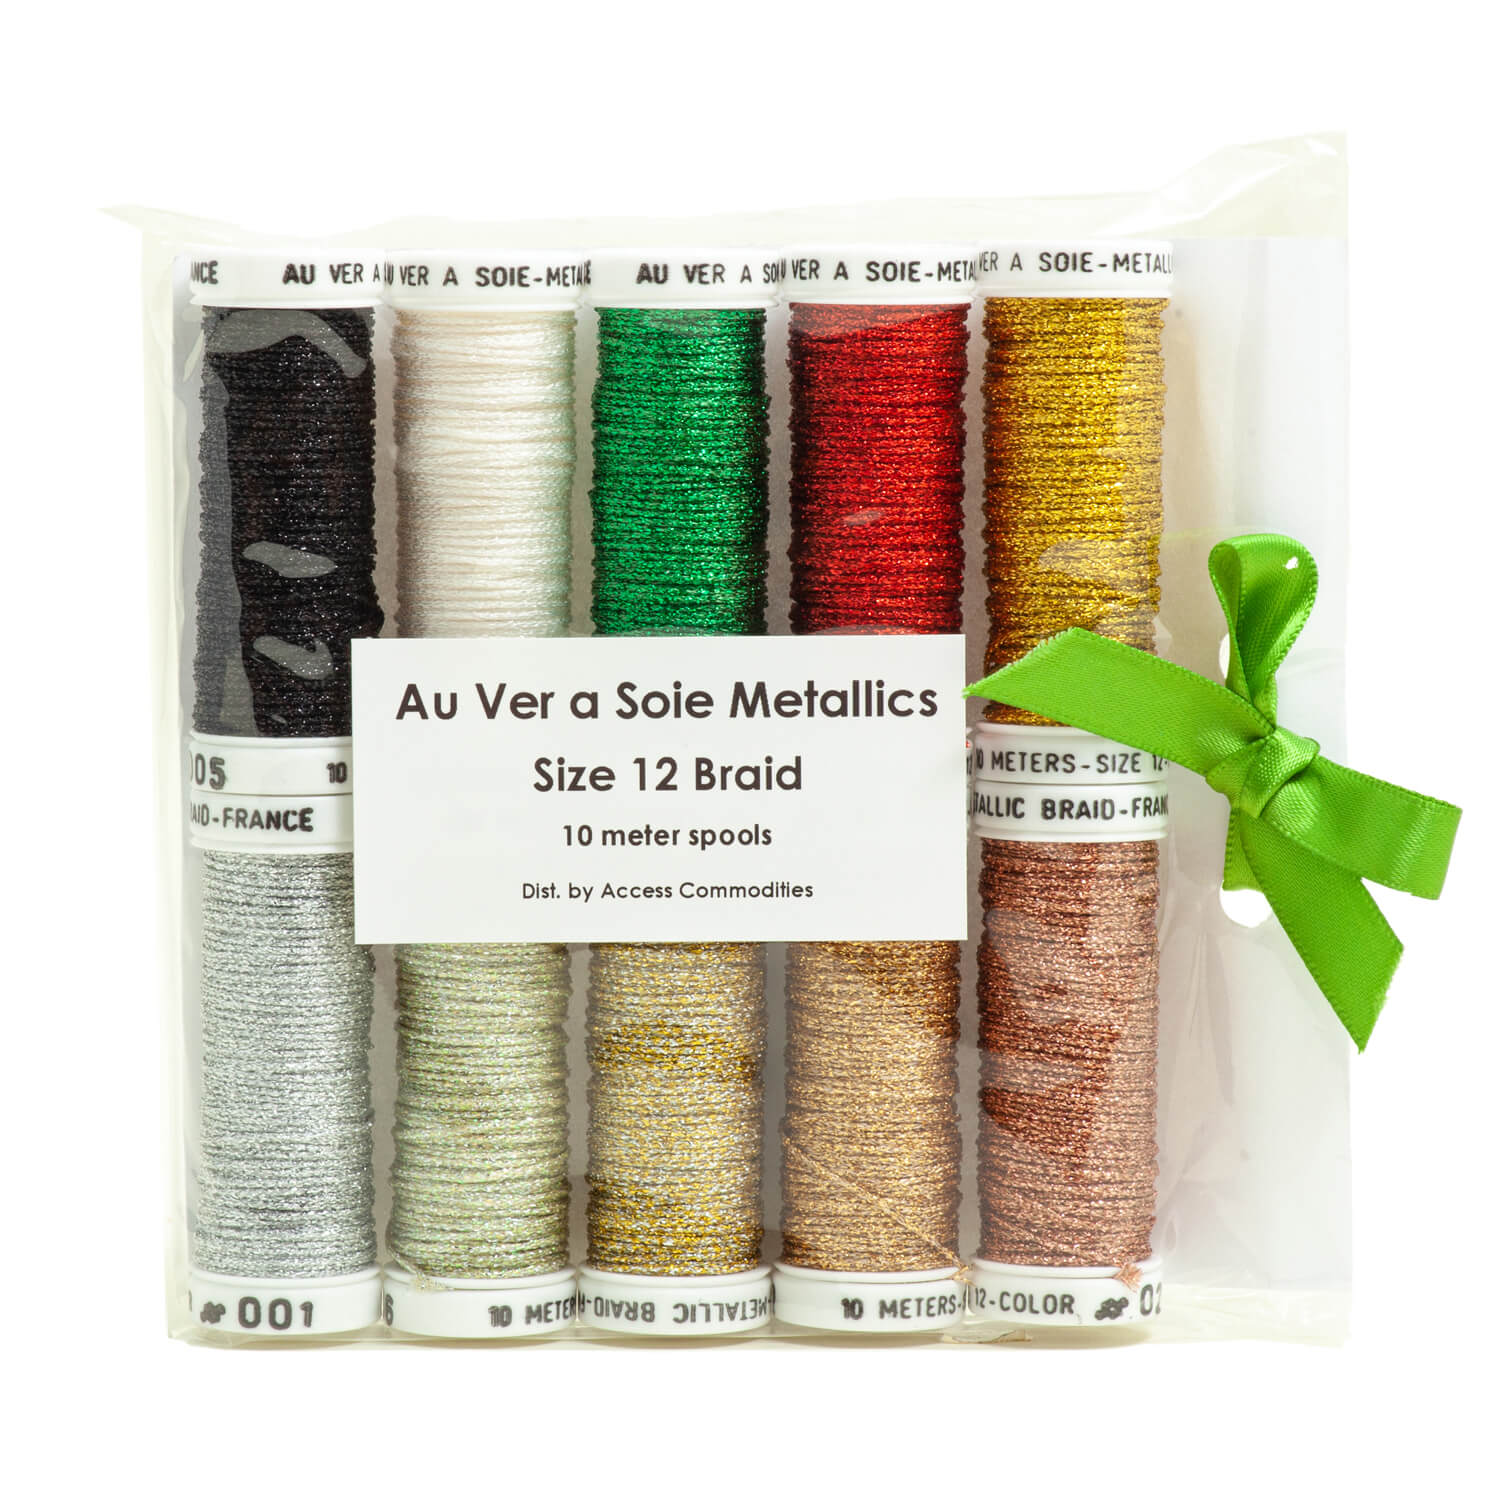 Flame Filament Silk Gimp Thread Kit by Access Commodities Au Ver au Soie